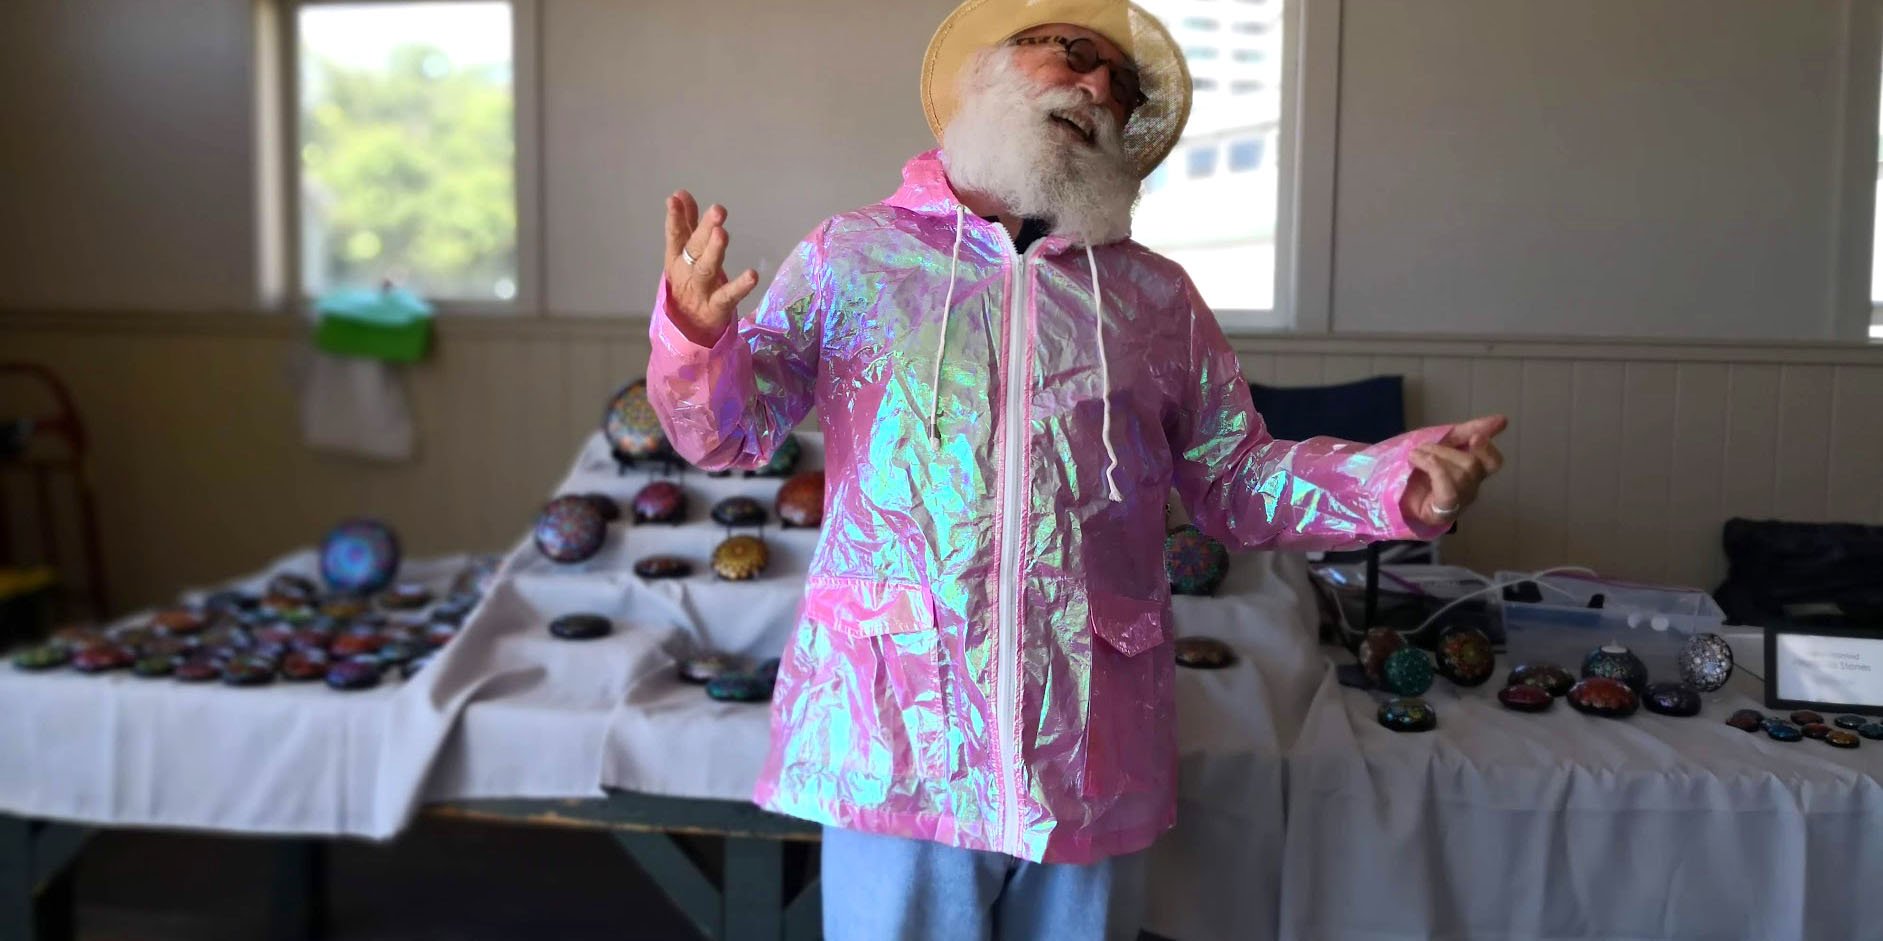 White-bearded man laughs modeling holographic raincoat